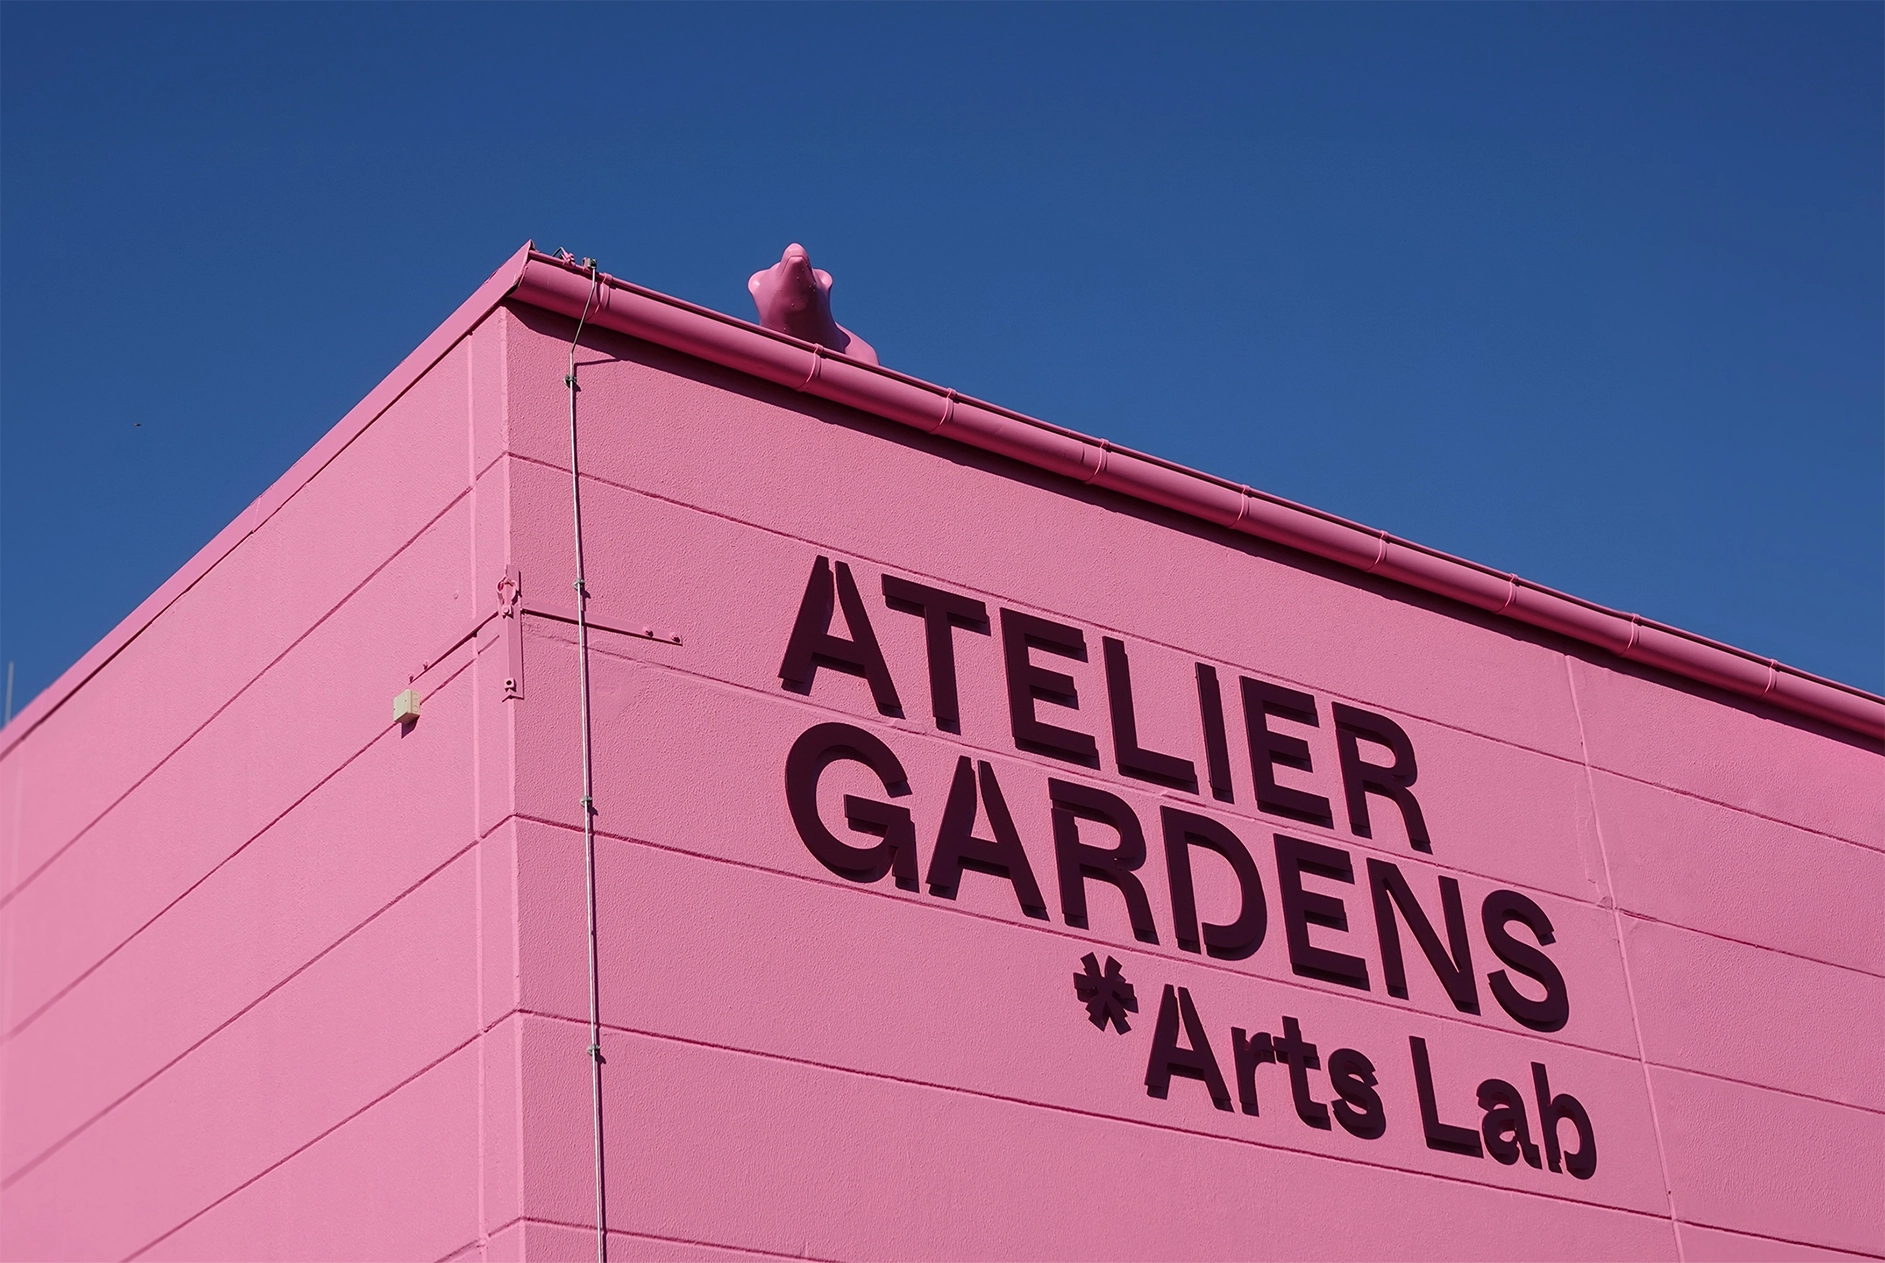 Atelier Gardens